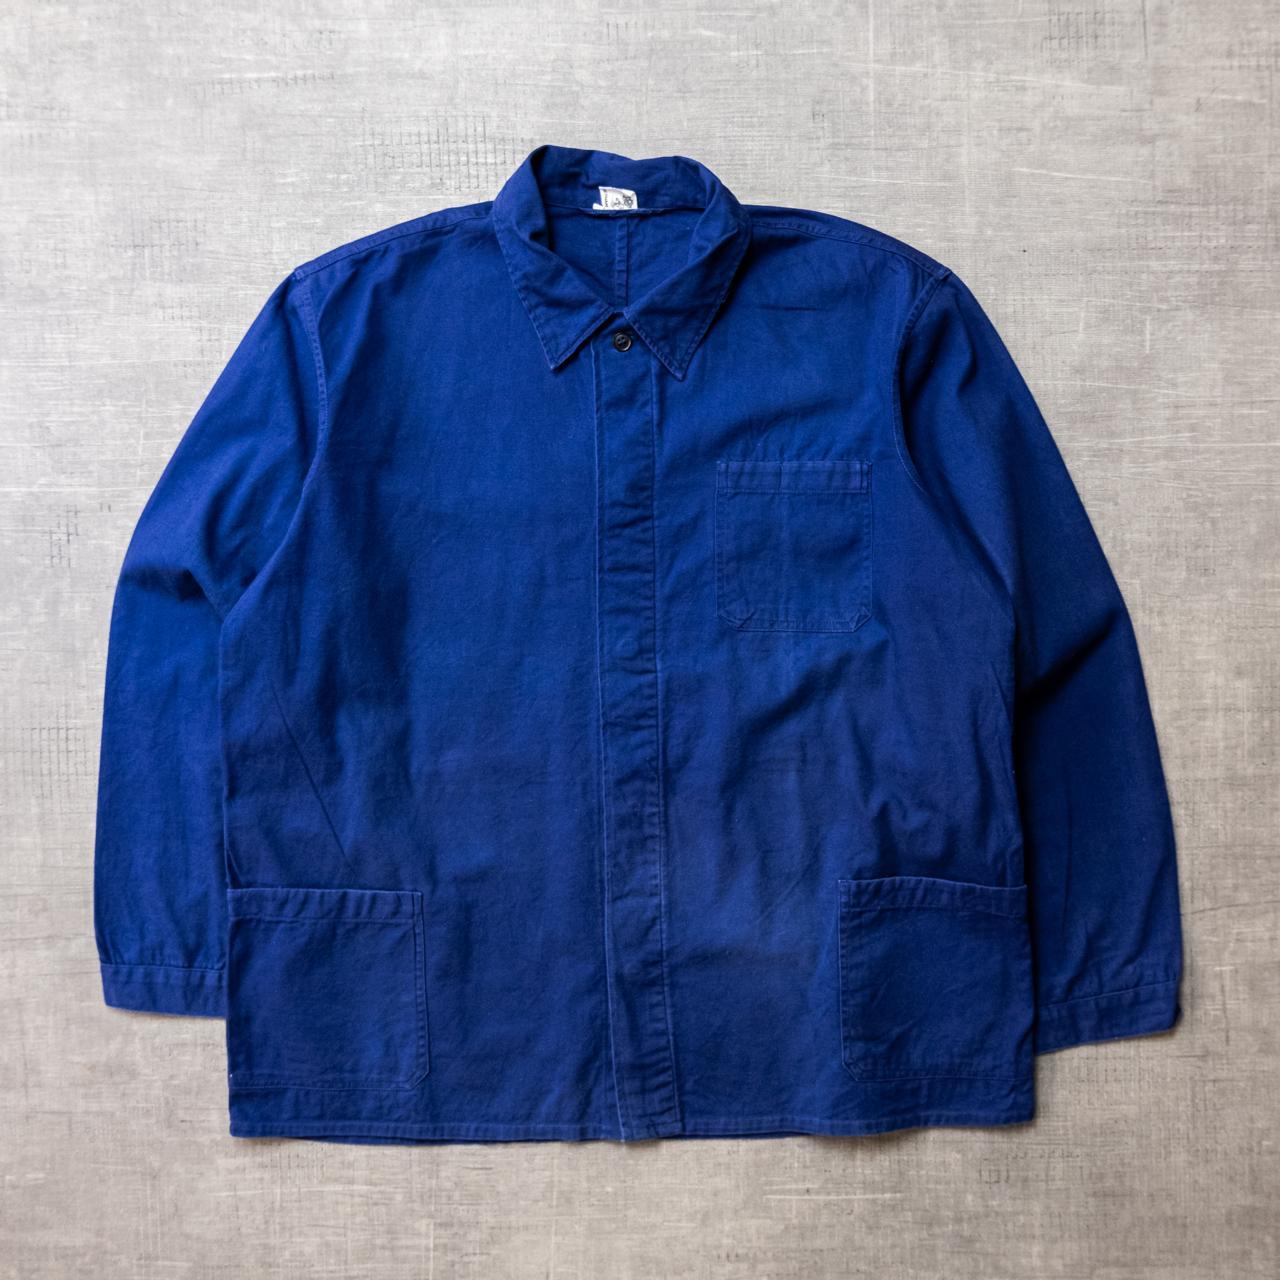 Vintage Workwear 70s Blue French Chore Jacket - Size... - Depop